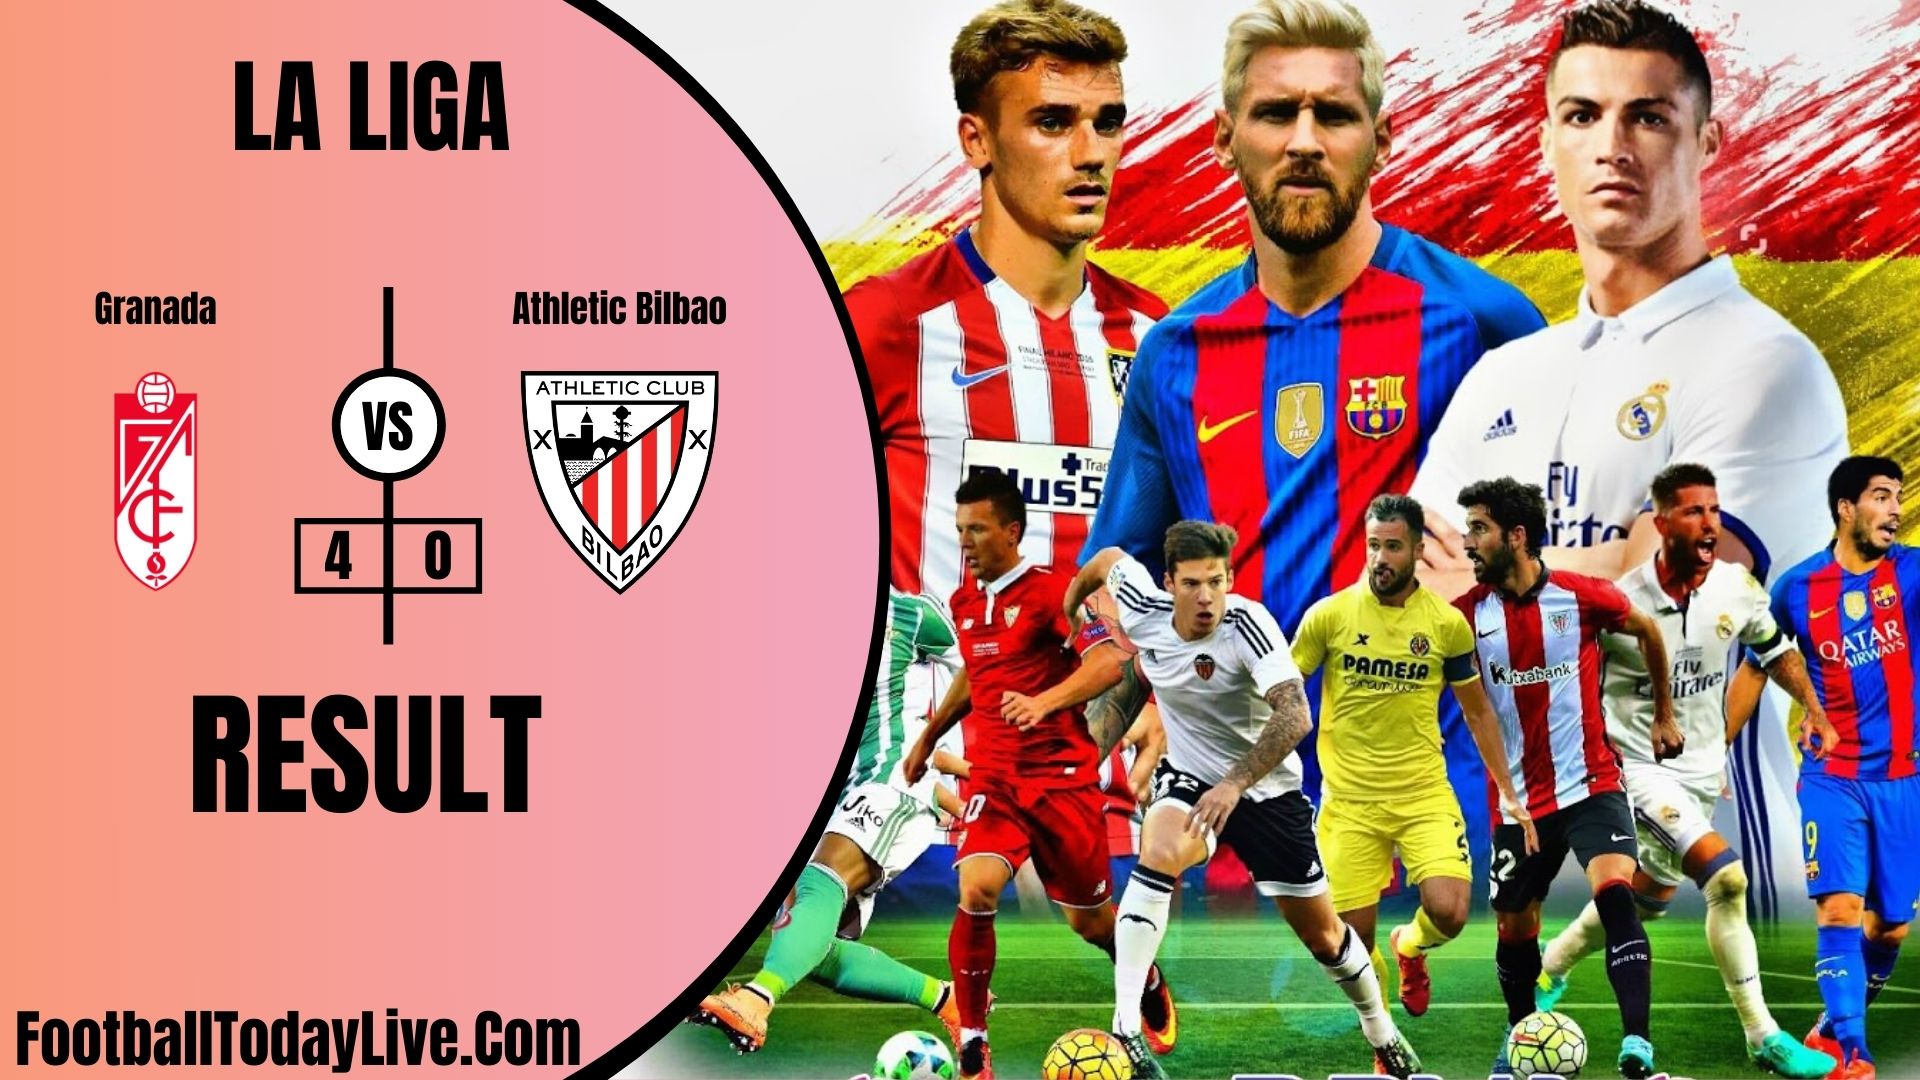 Granada Vs Athletic Bilbao | La Liga Week 38 Result 2020